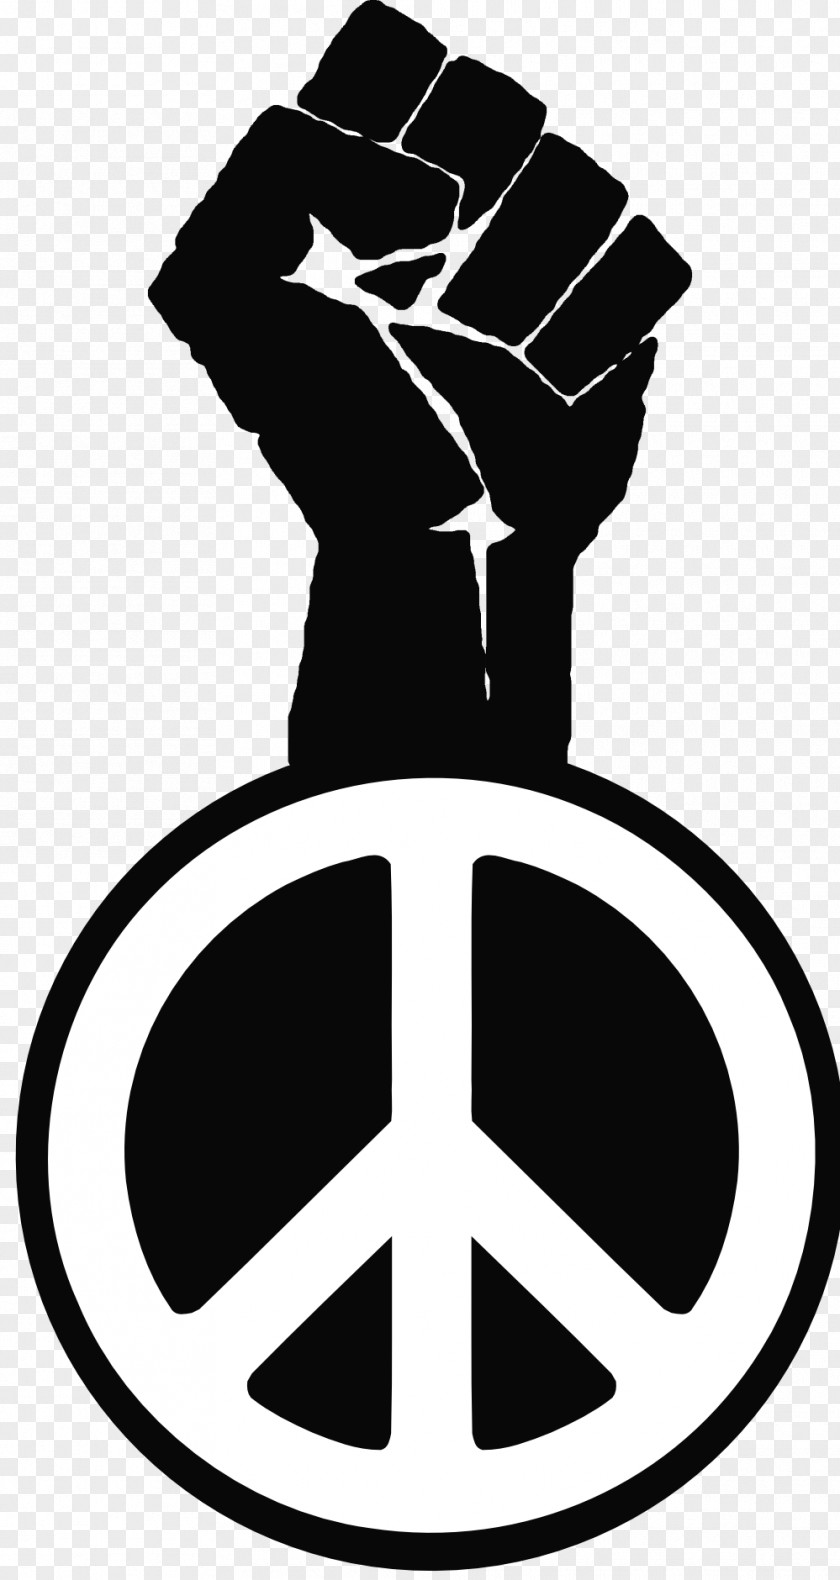 Closed Fist Raised Peace Symbols Clip Art PNG